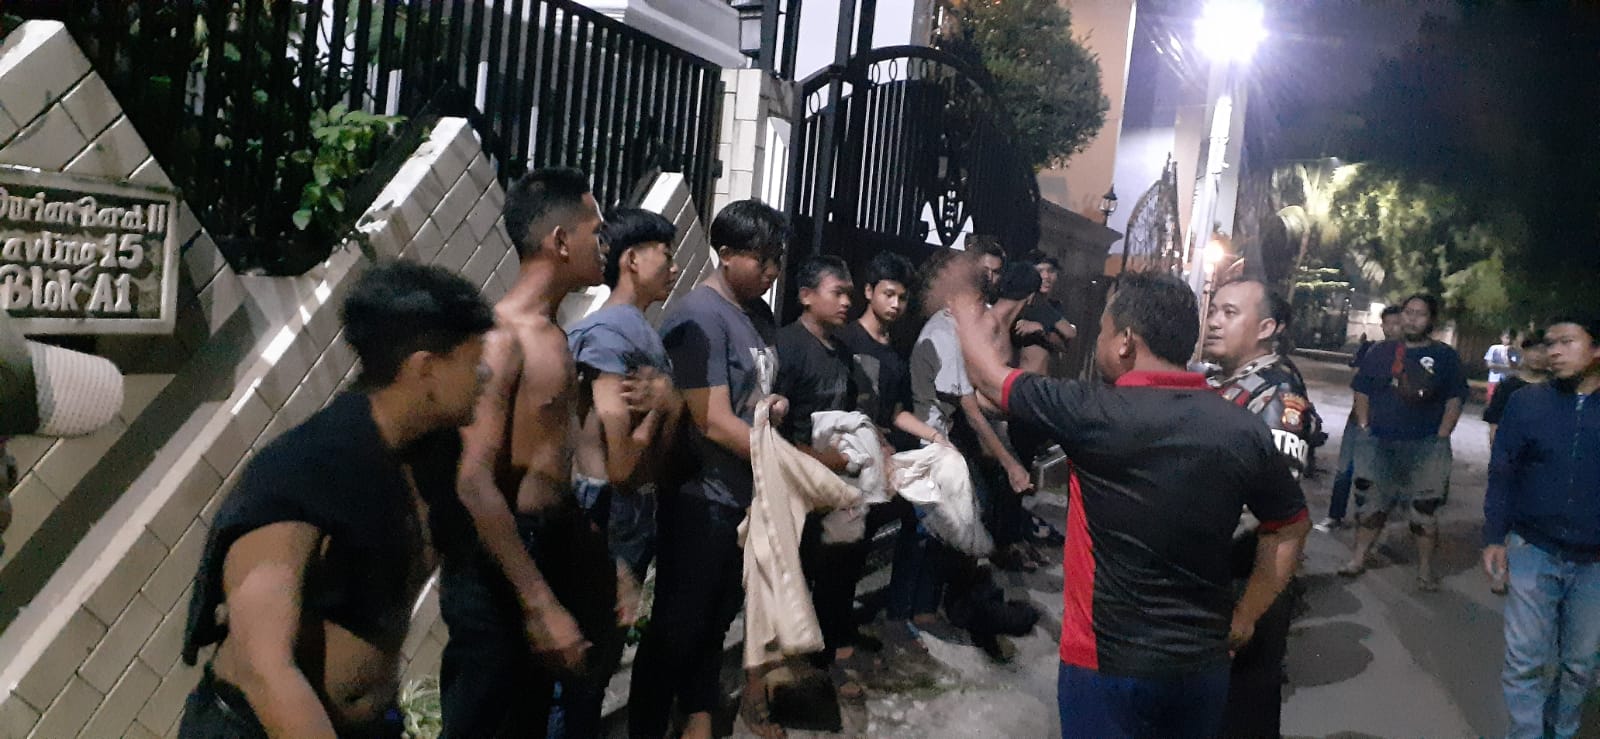 Hendak Perang Sarung, 15 Remaja di Jagakarsa Jakarta Selatan Diamankan Polisi